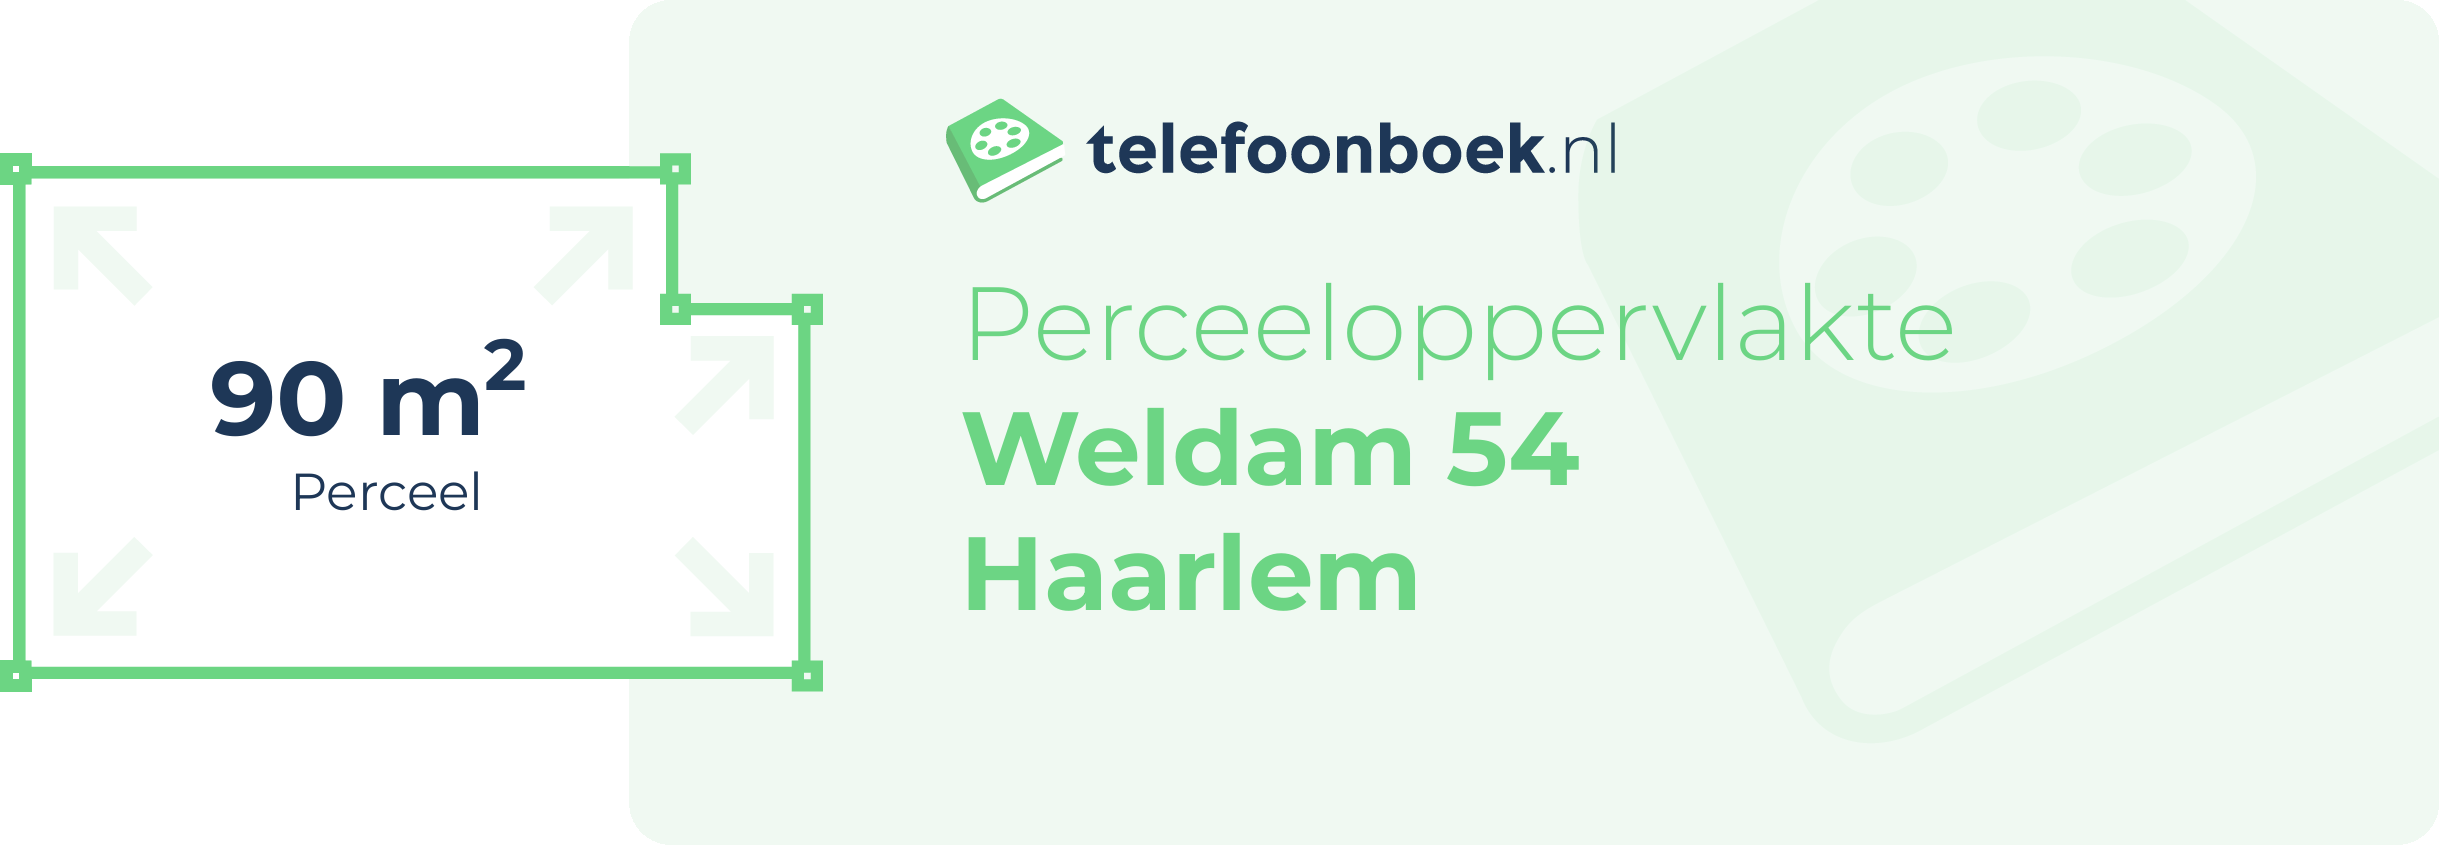 Perceeloppervlakte Weldam 54 Haarlem